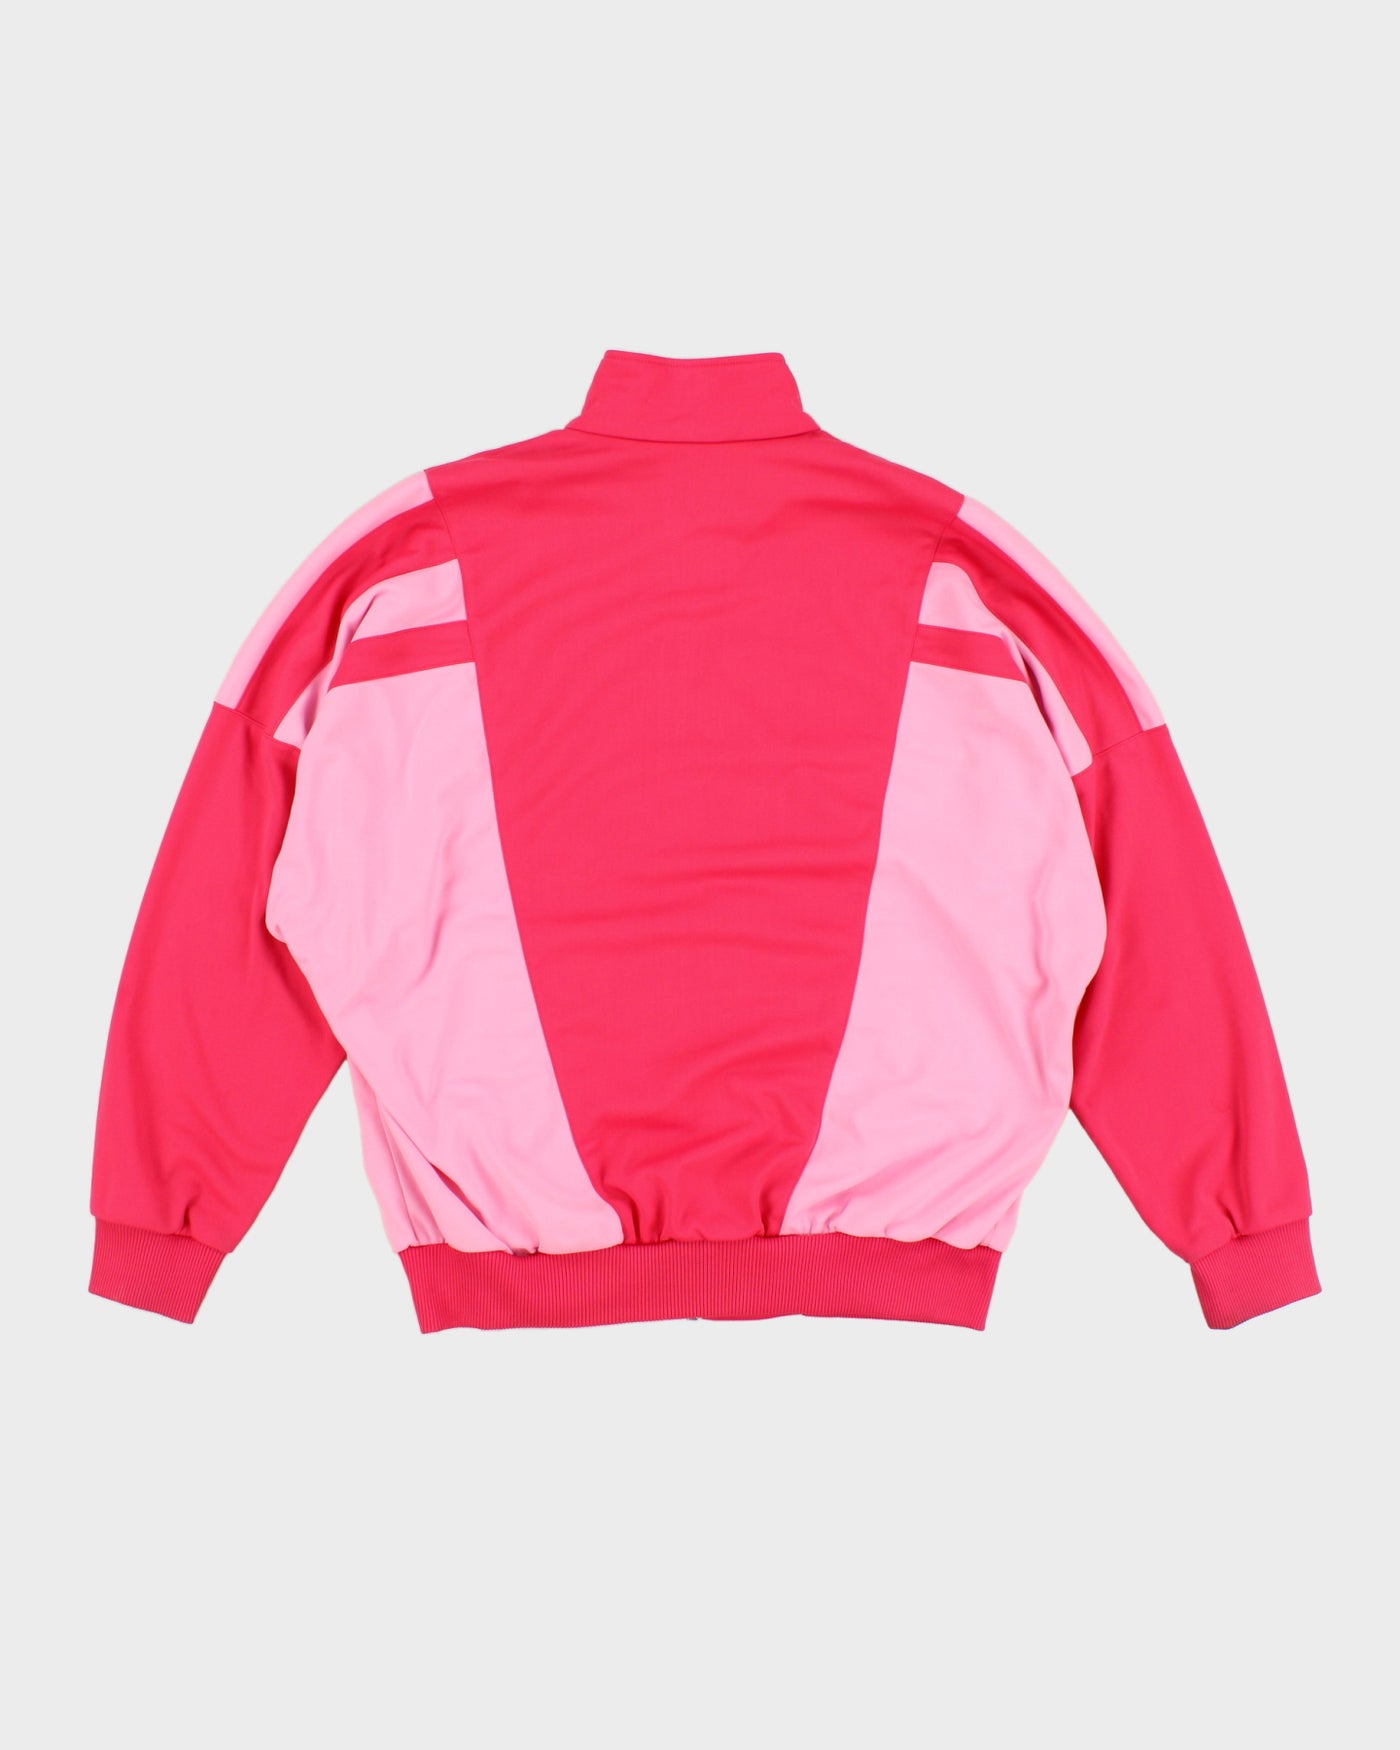 Vintage 80s Adidas Pink Track Jacket - XL